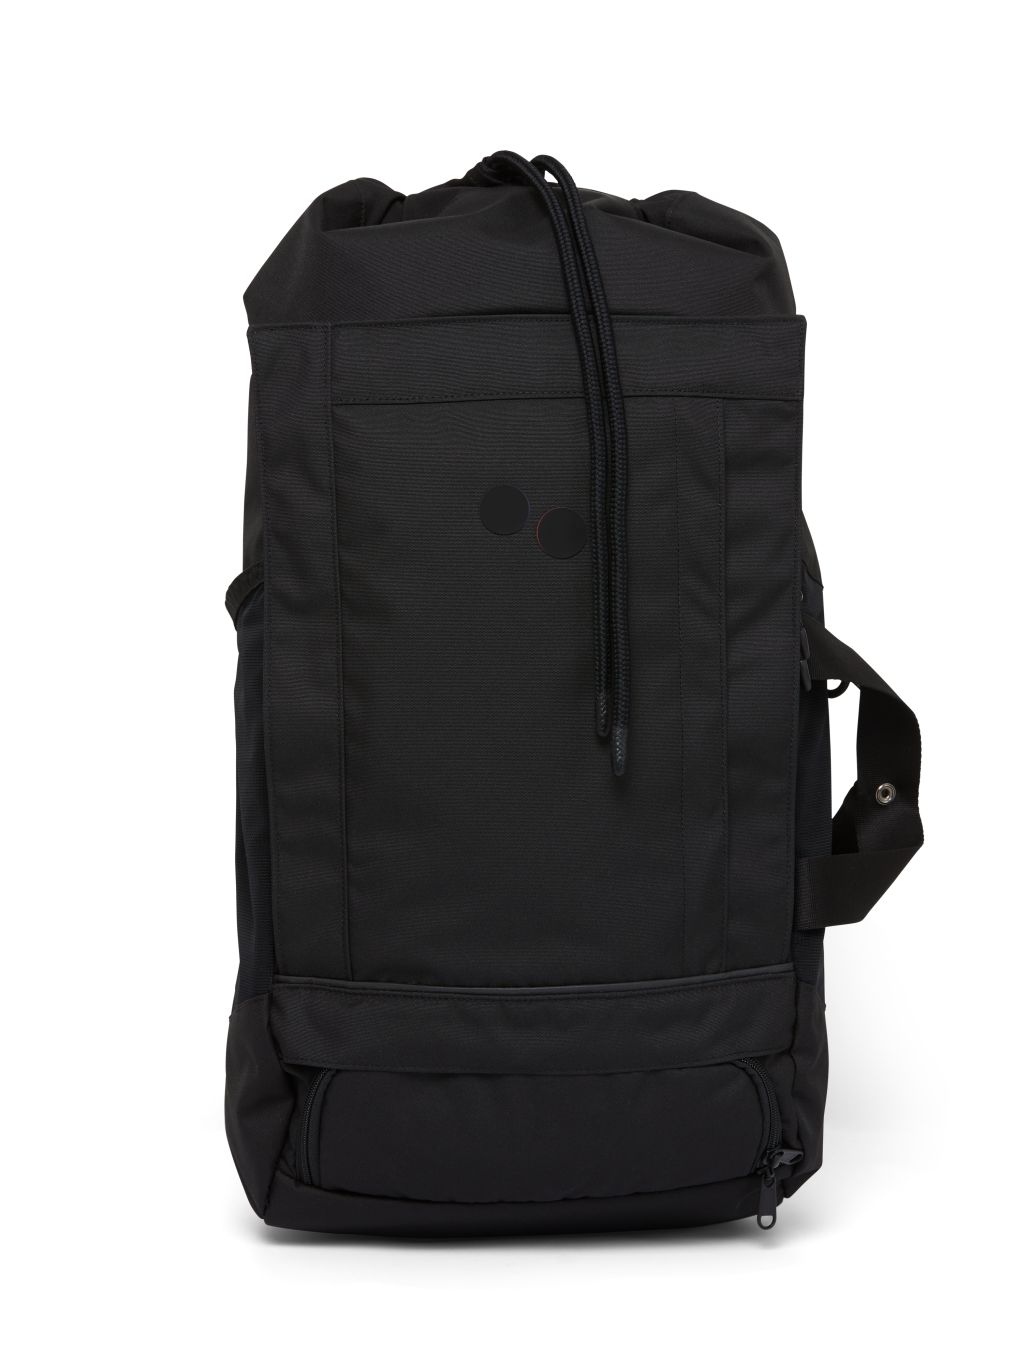 BLOK Large Backpack rooted black